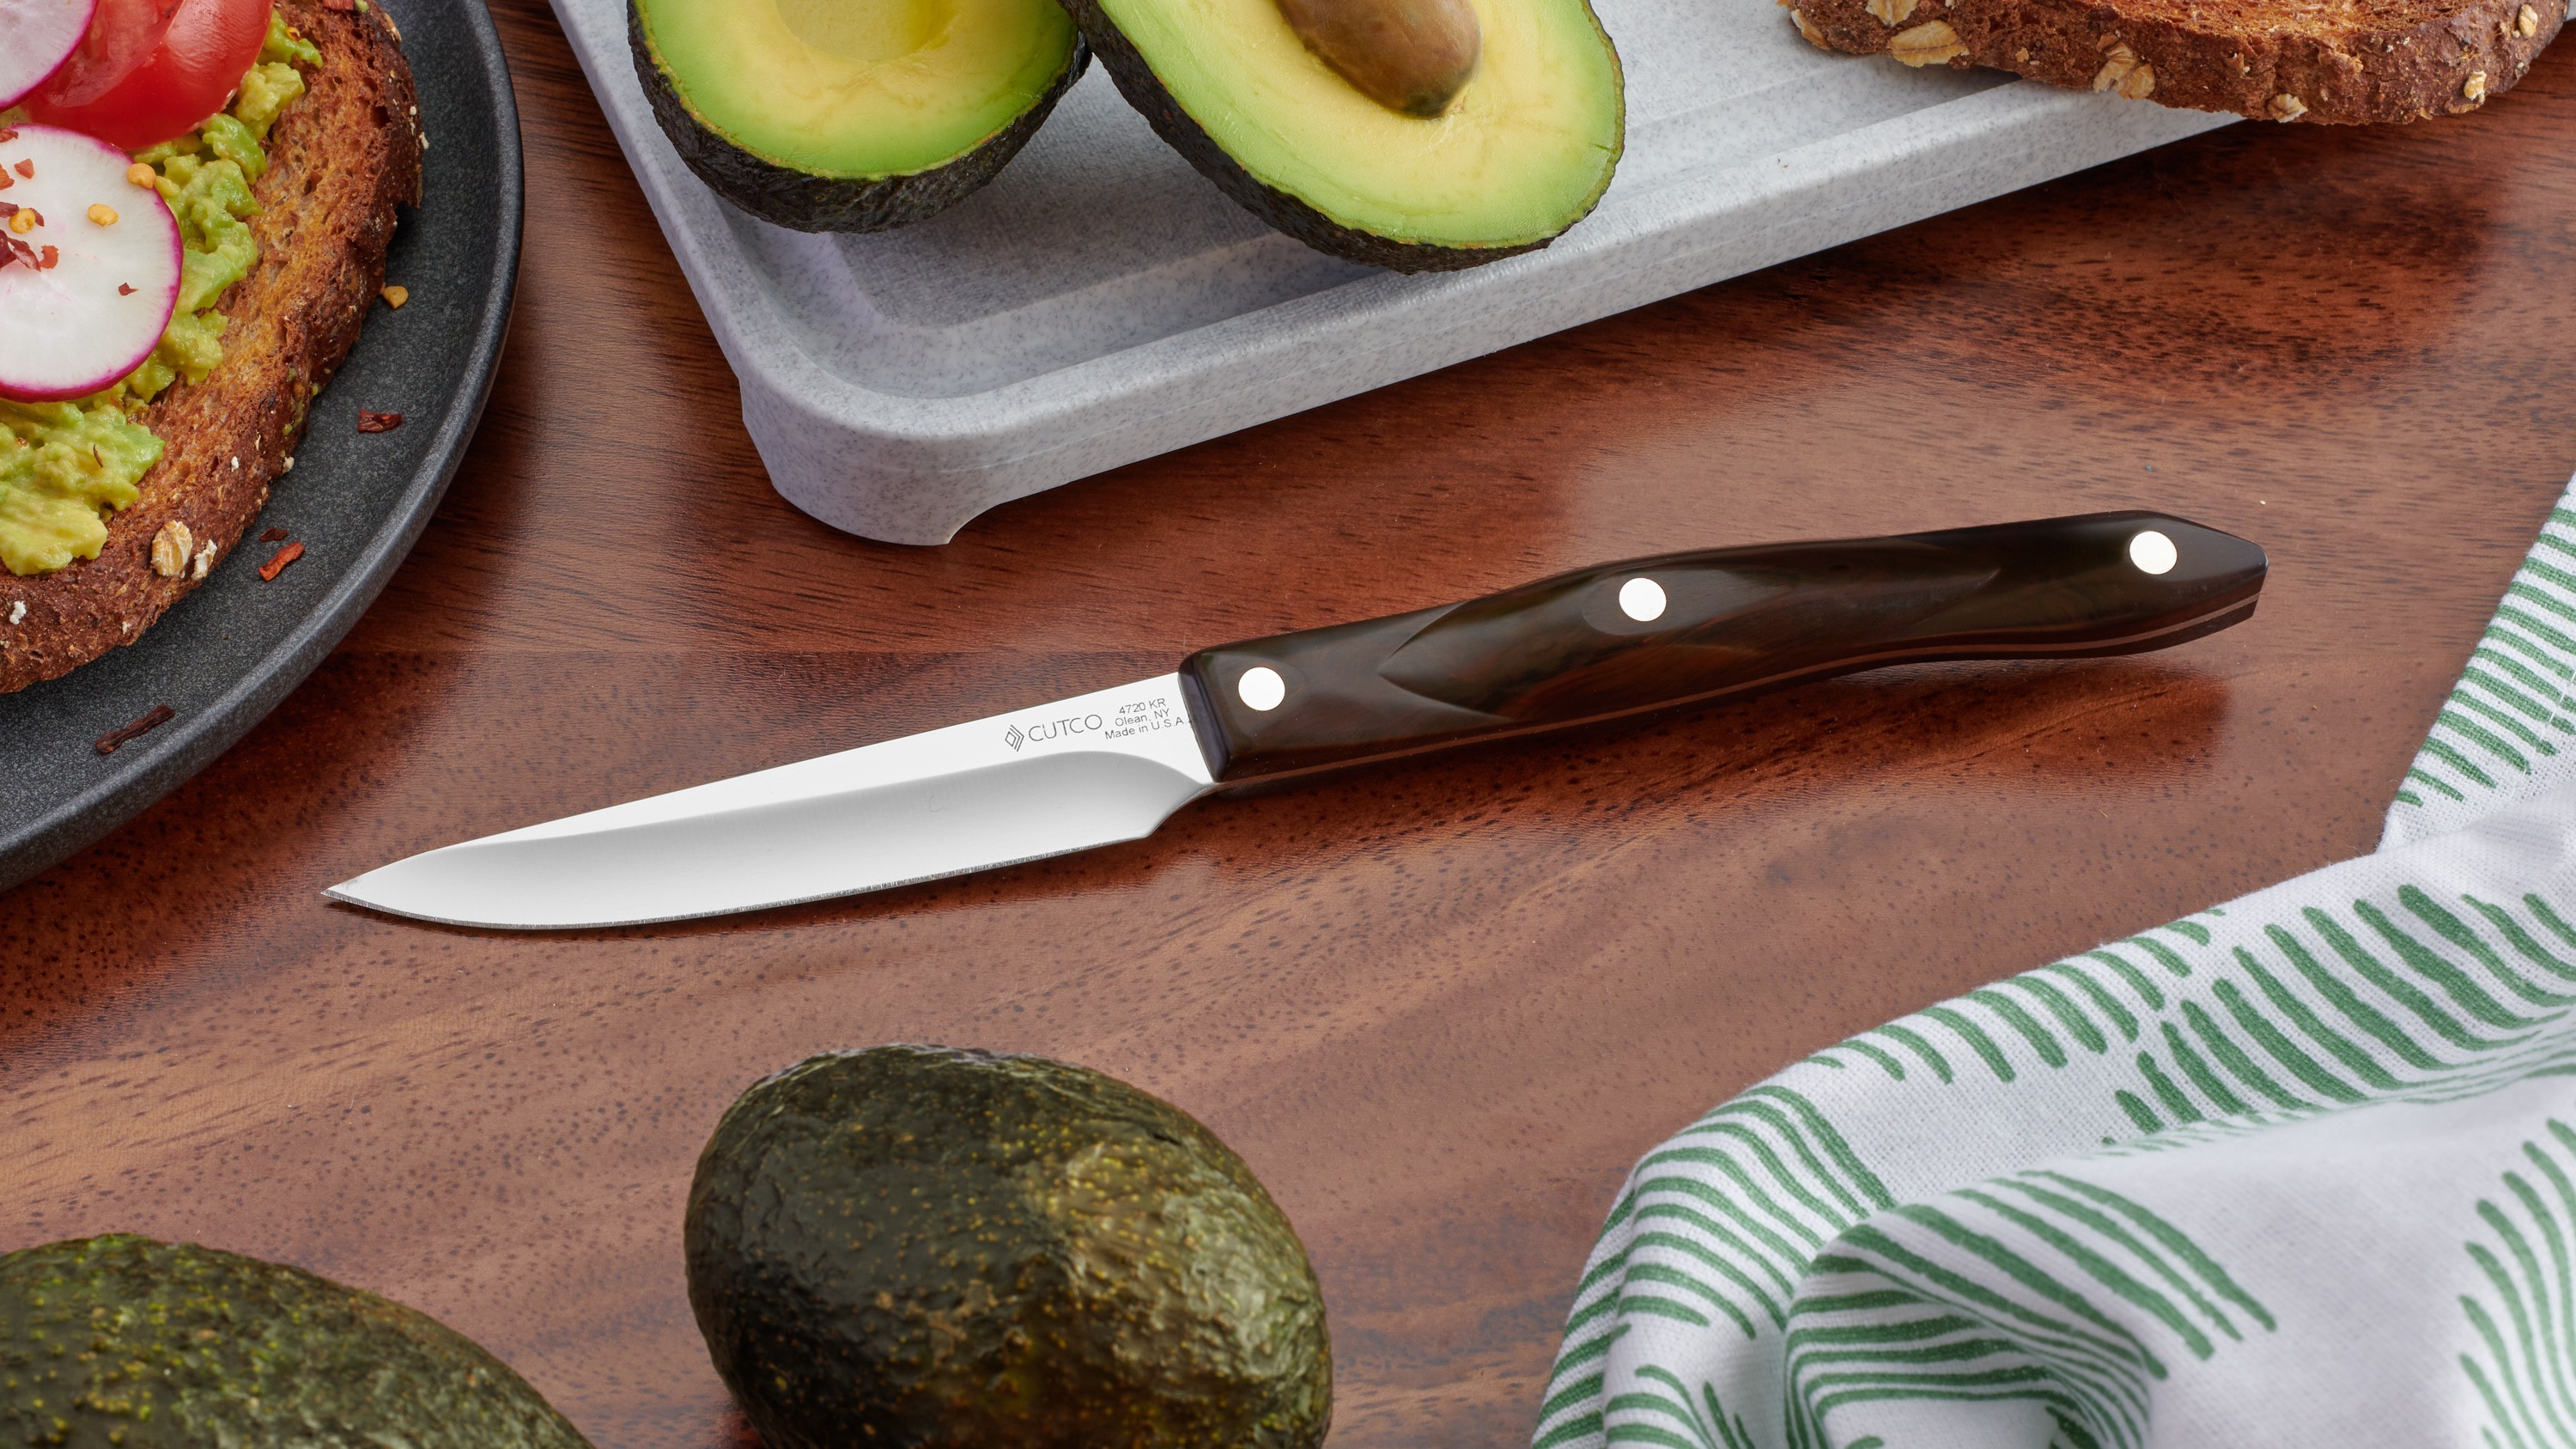 Cutco 4120 3 Gourmet Paring Knife